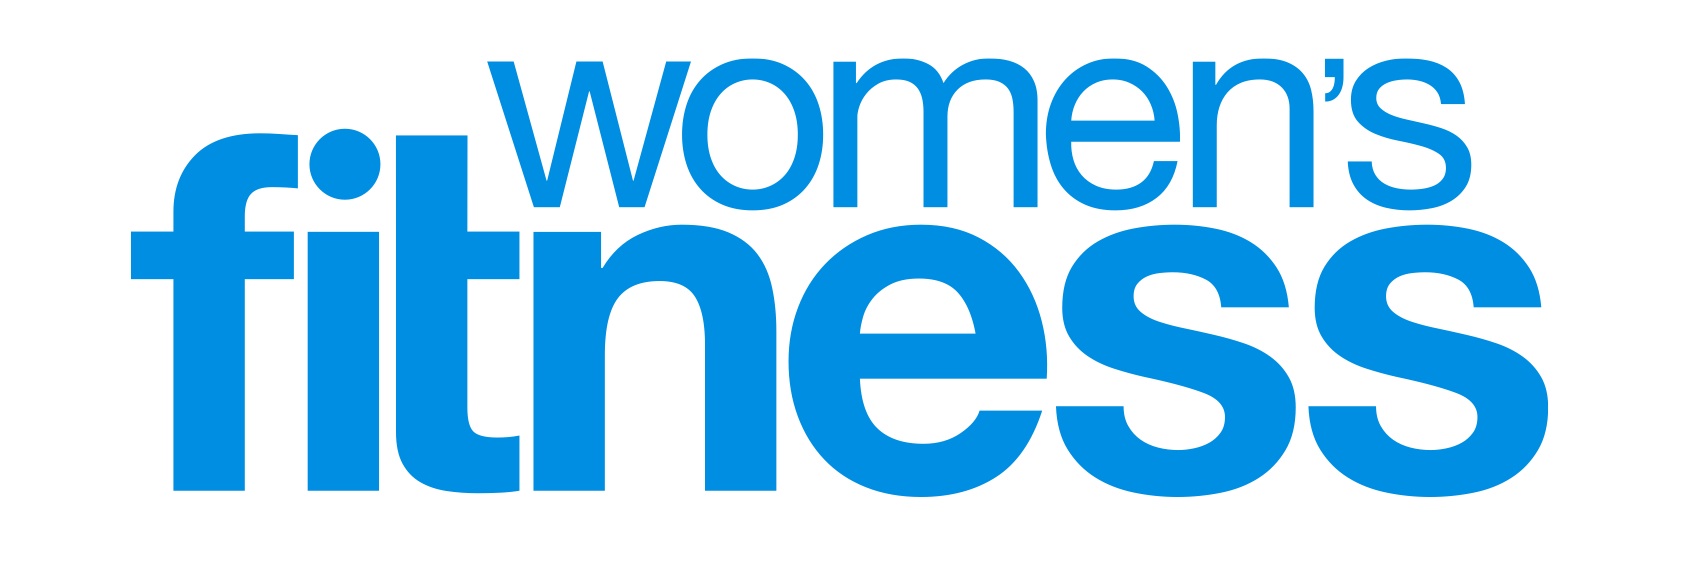 womensfitness_logo.jpg